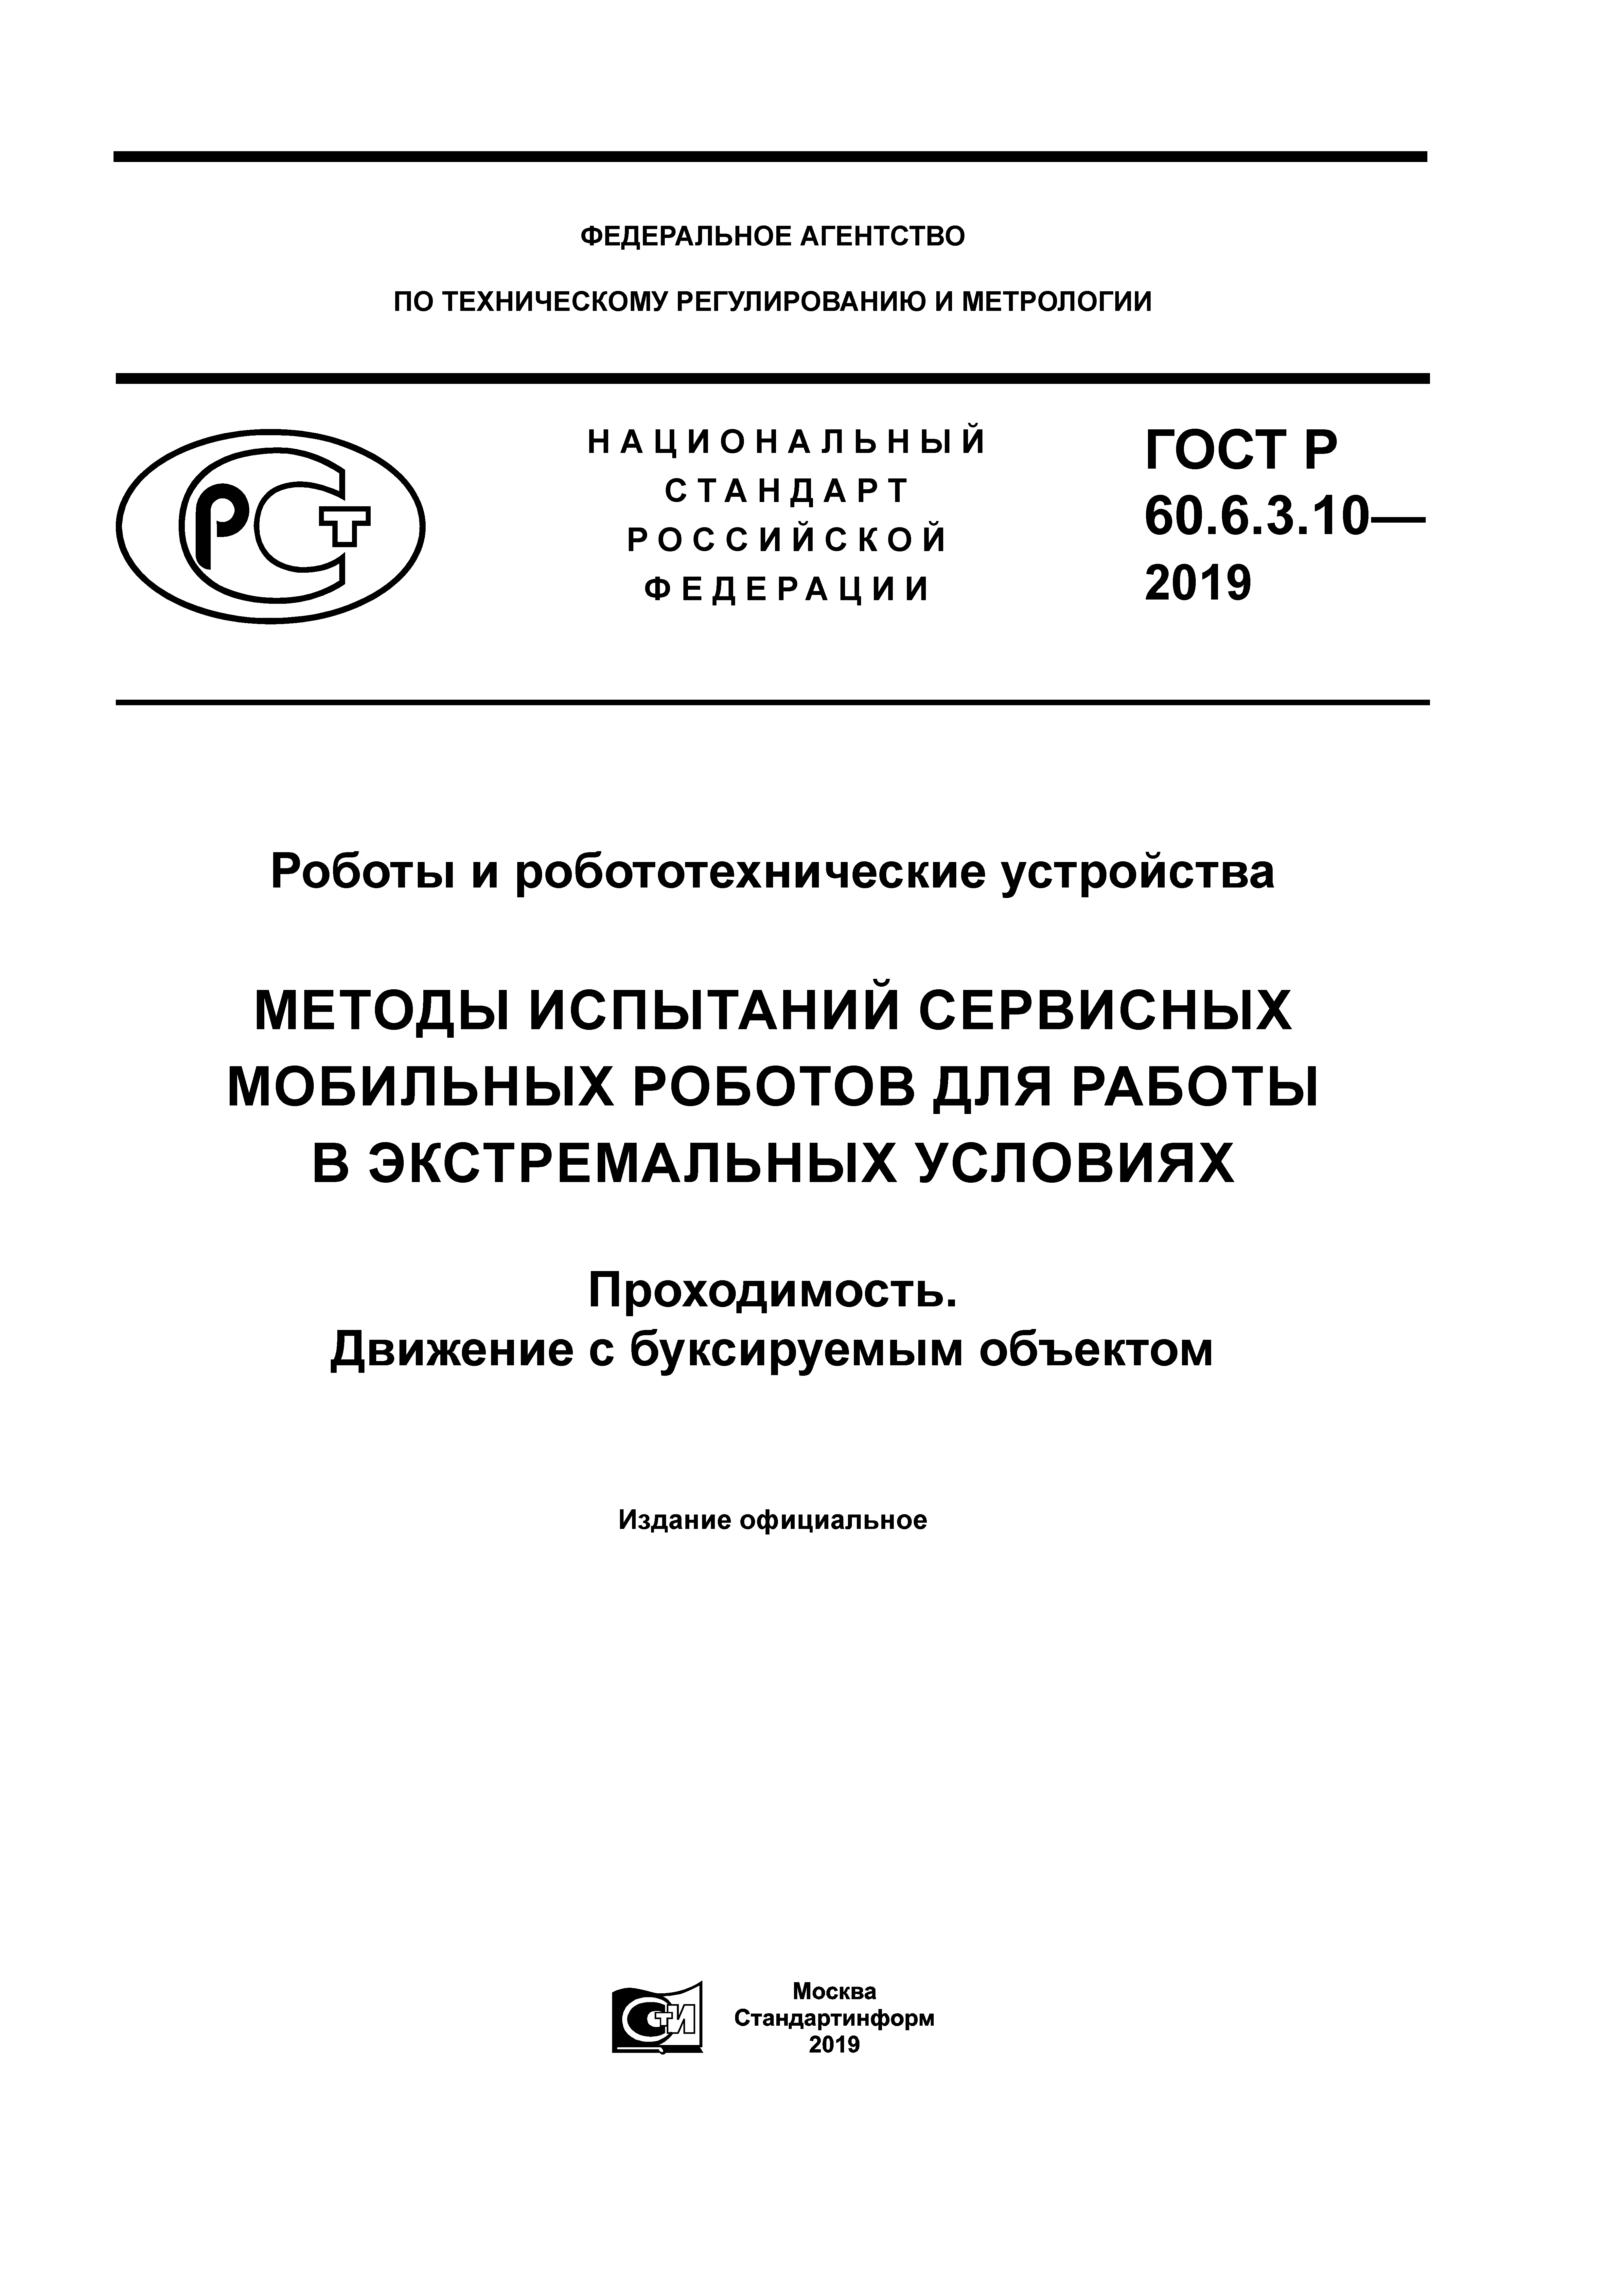 ГОСТ Р 60.6.3.10-2019